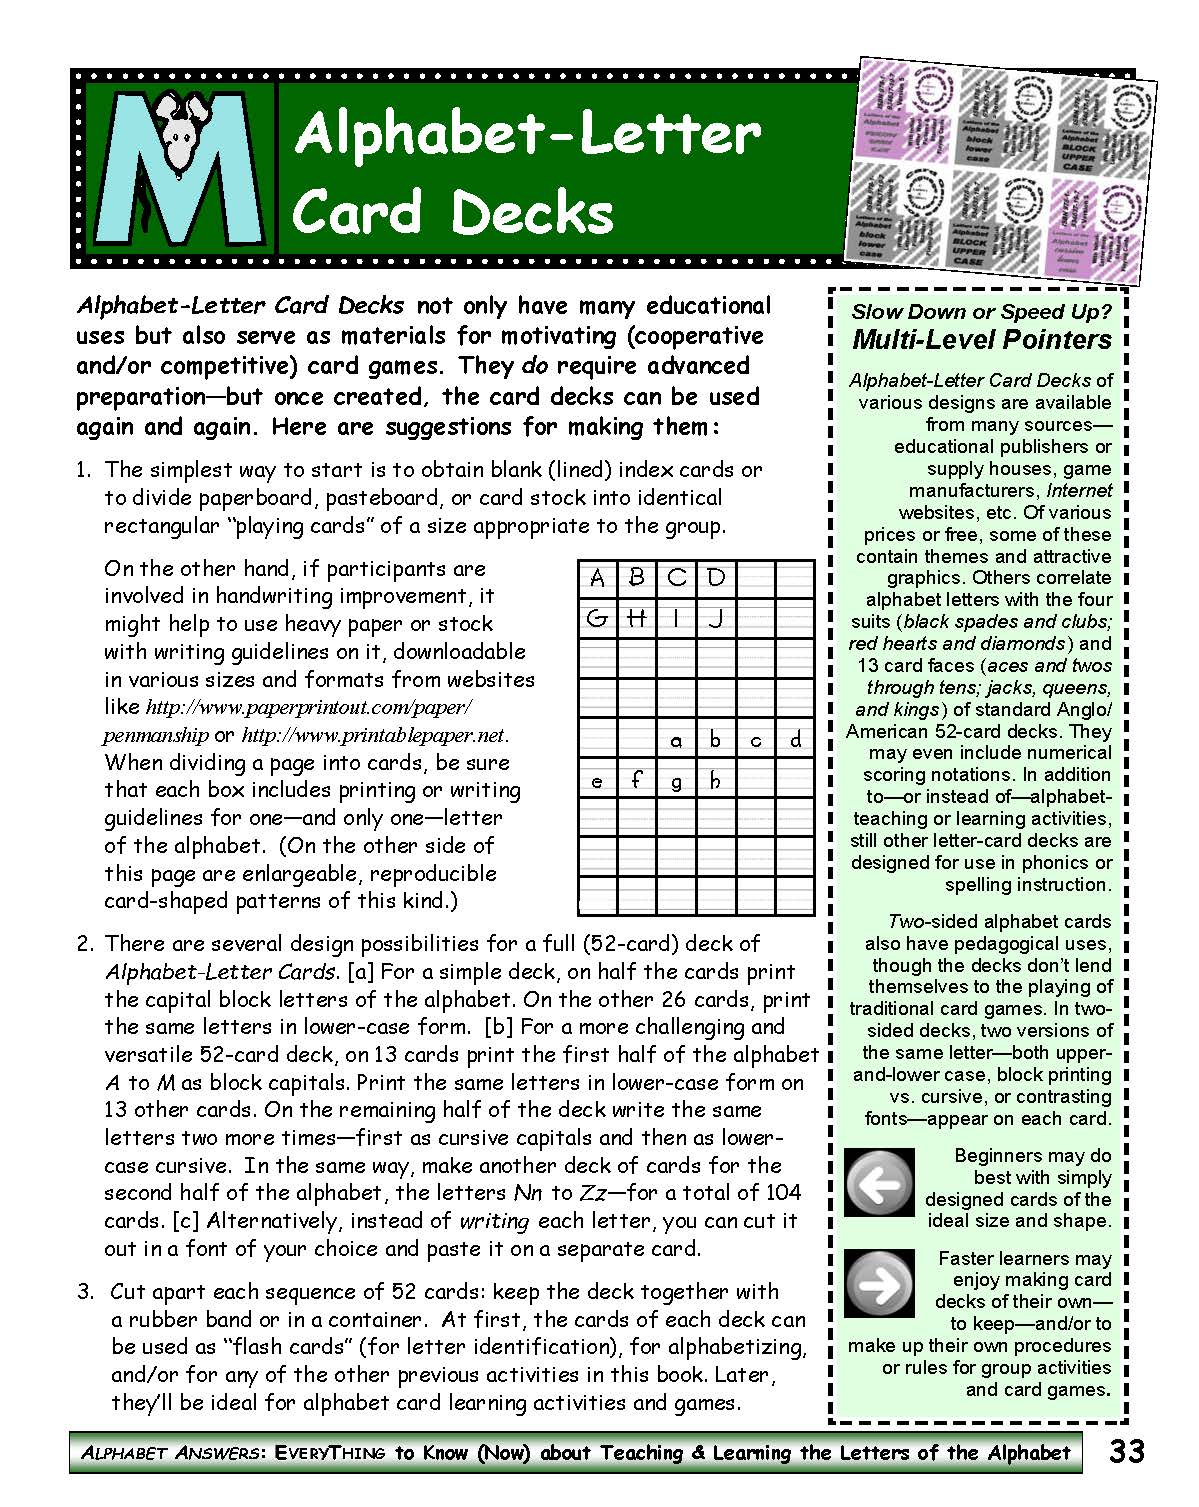 A-07.1: Make & Use Alphabet- Letter Card Packs